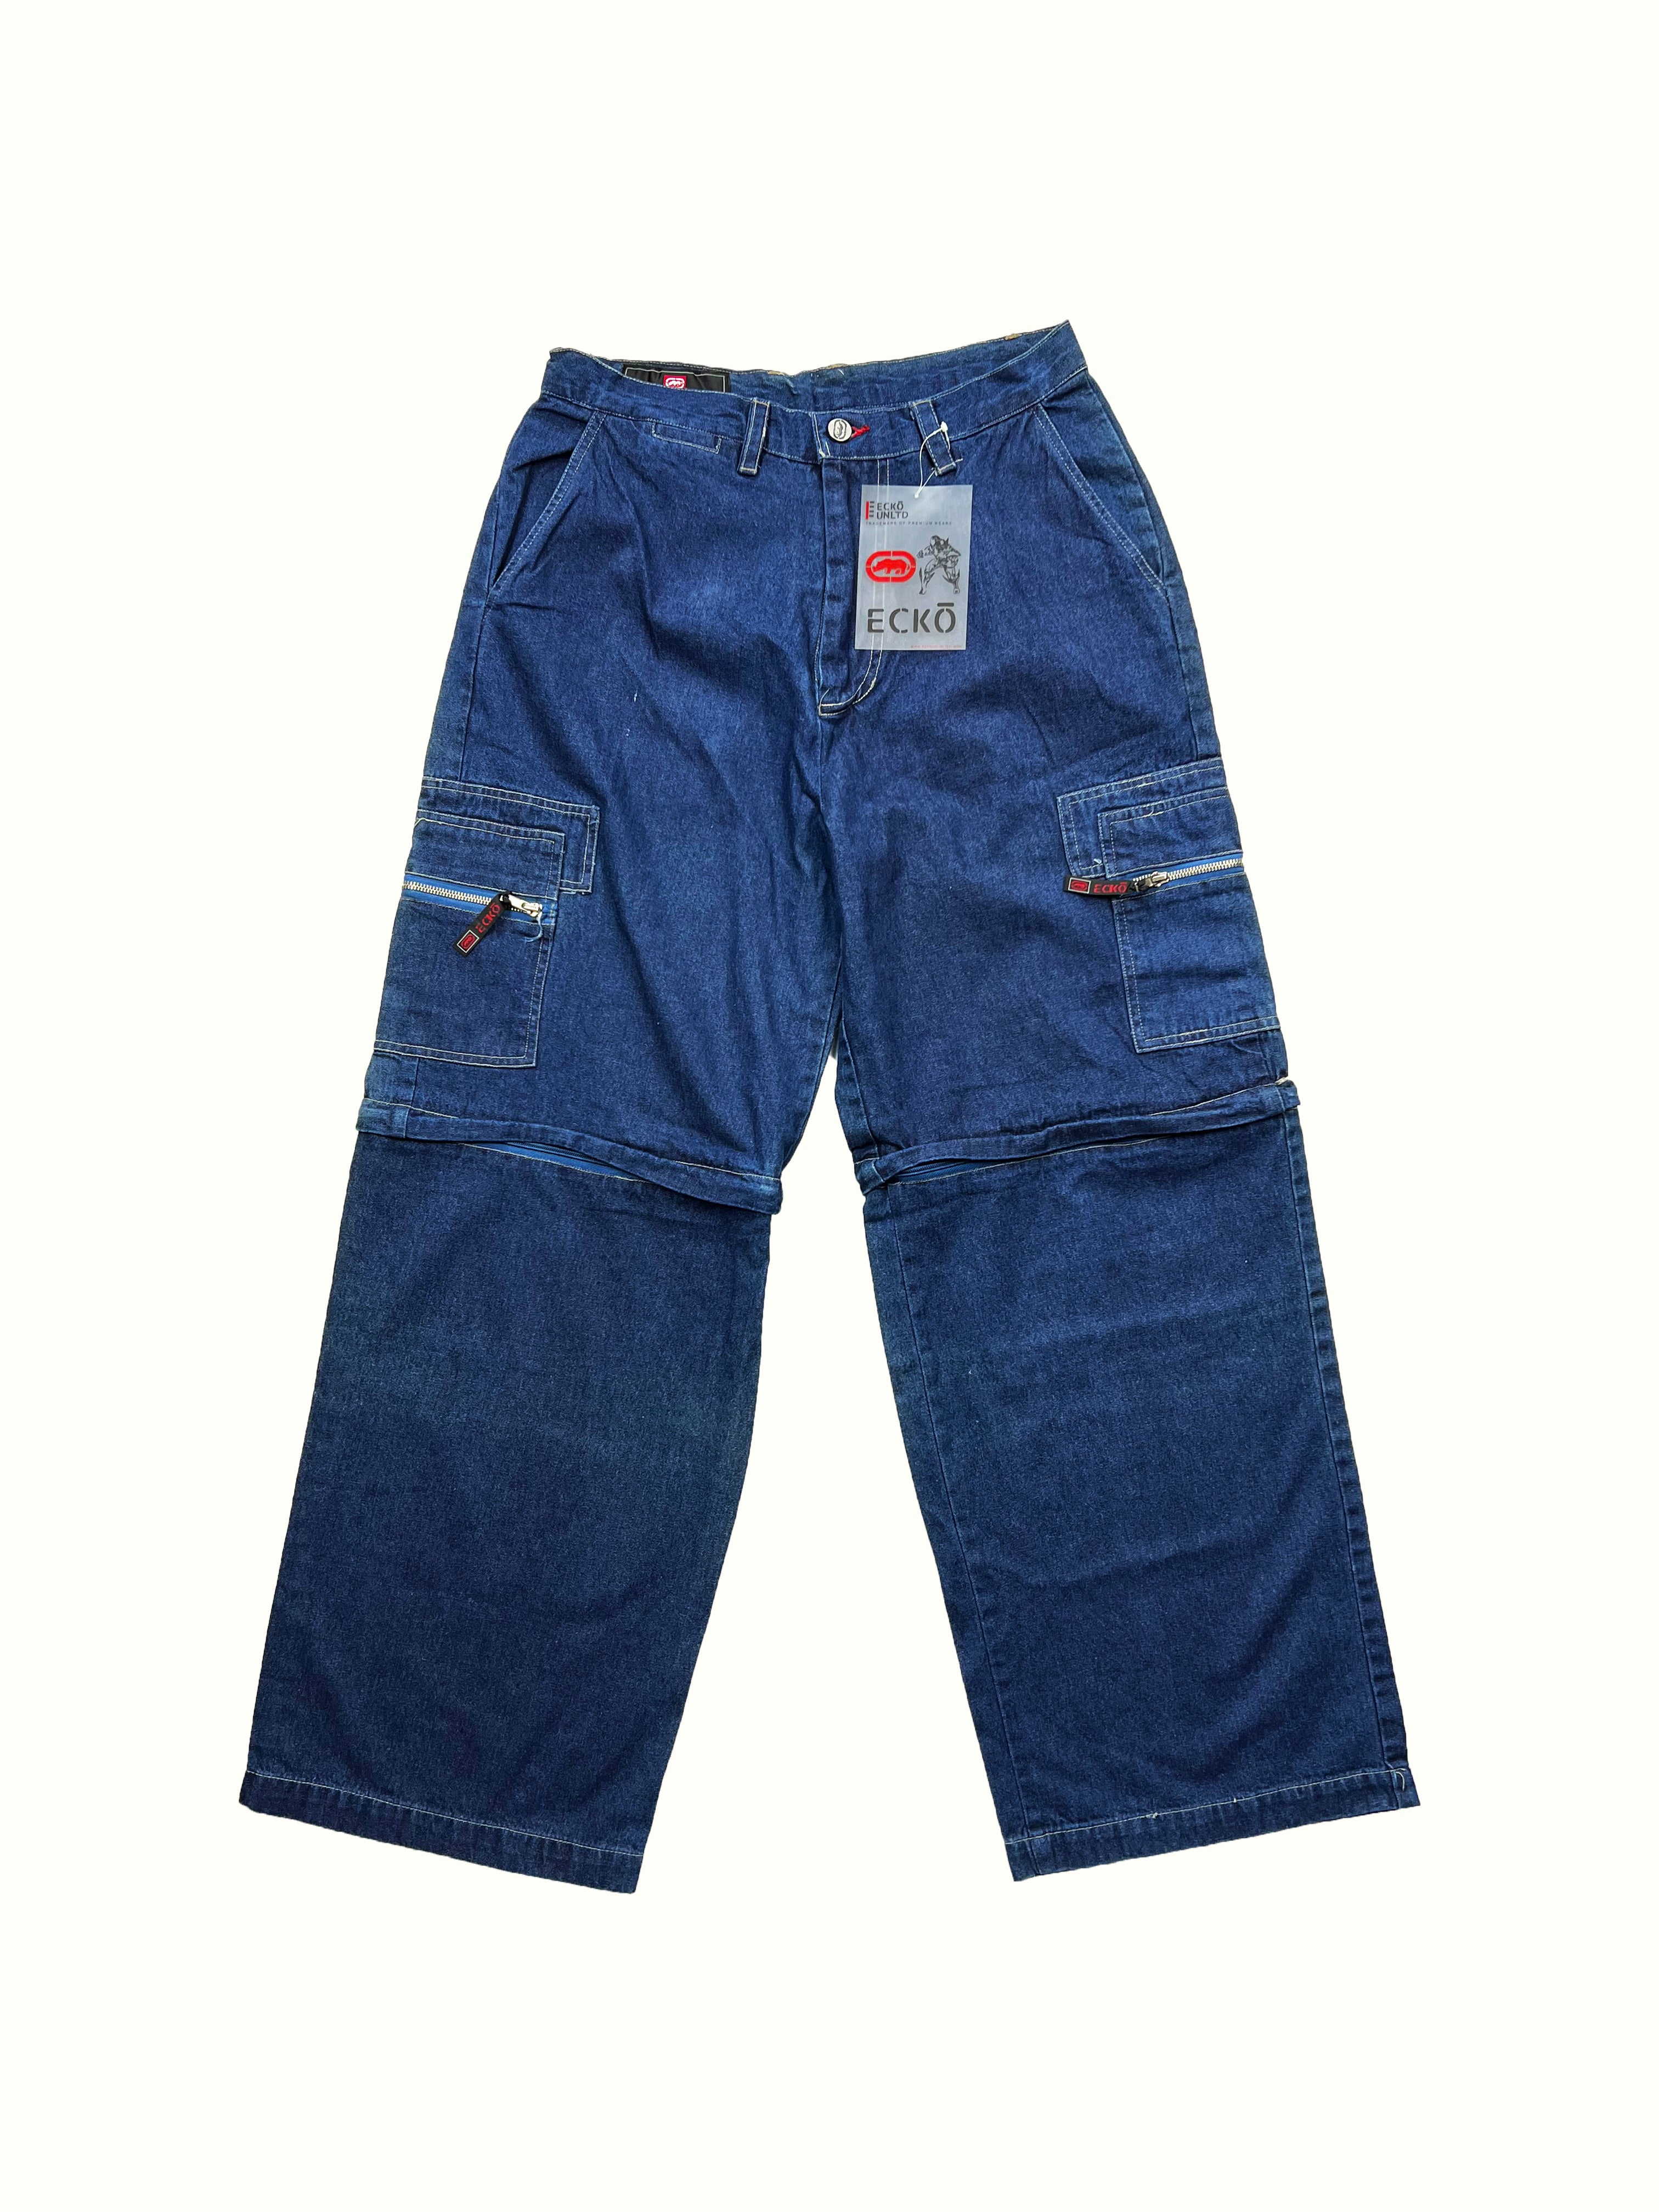 Ecko Cargo Jeans/Shorts BNWT 00's